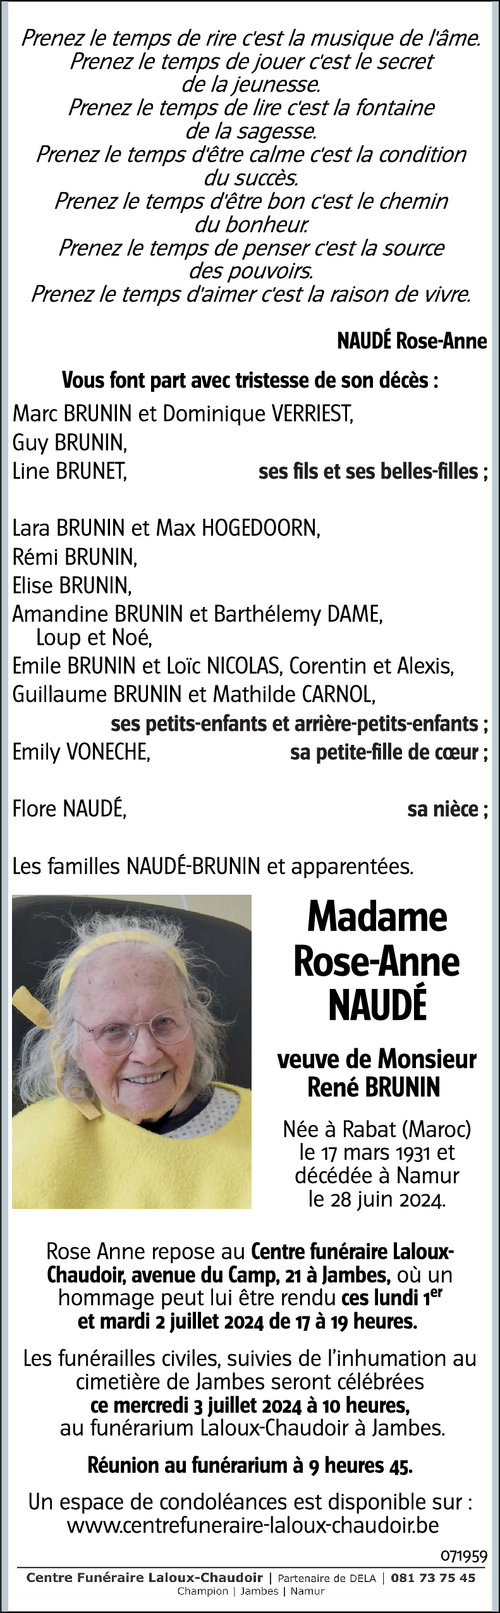 Rose Anne NAUDE